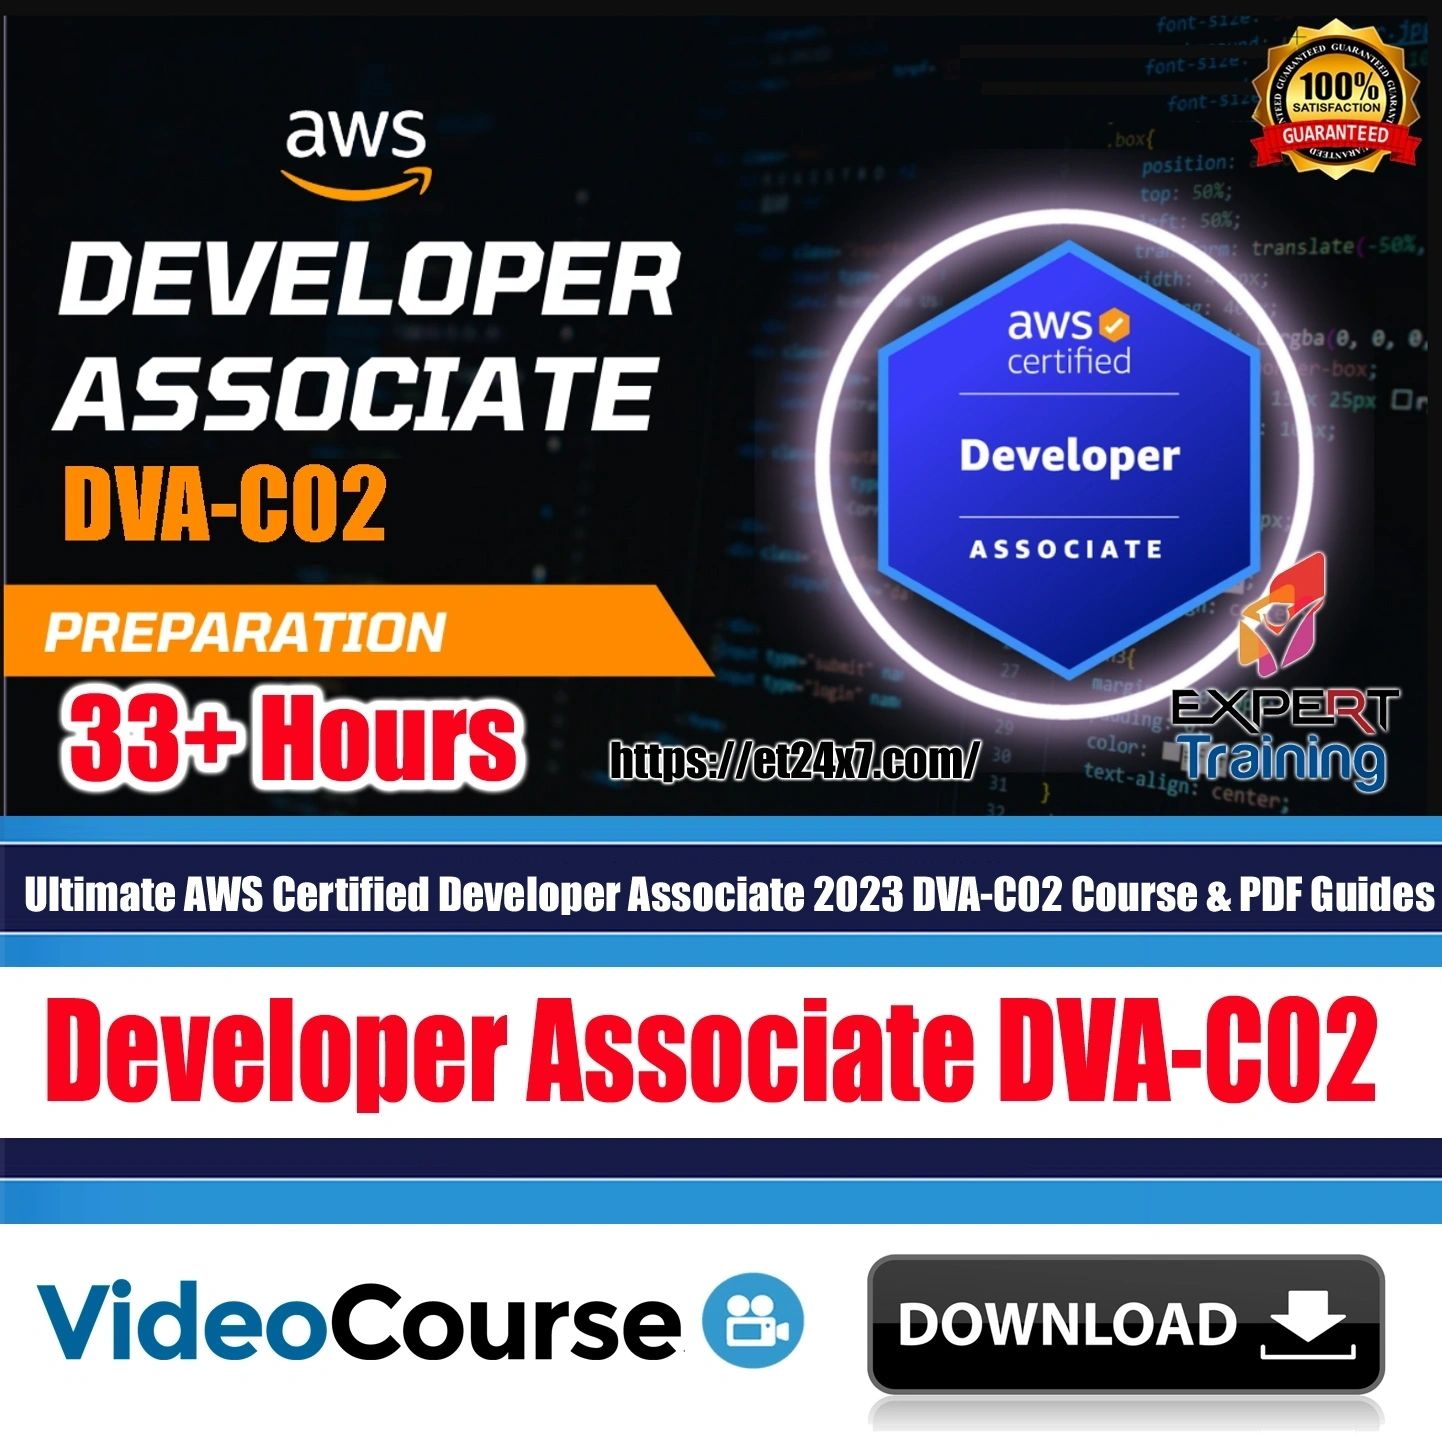 Ultimate AWS Certified Developer Associate 2023 DVA-C02 Course & PDF Guides